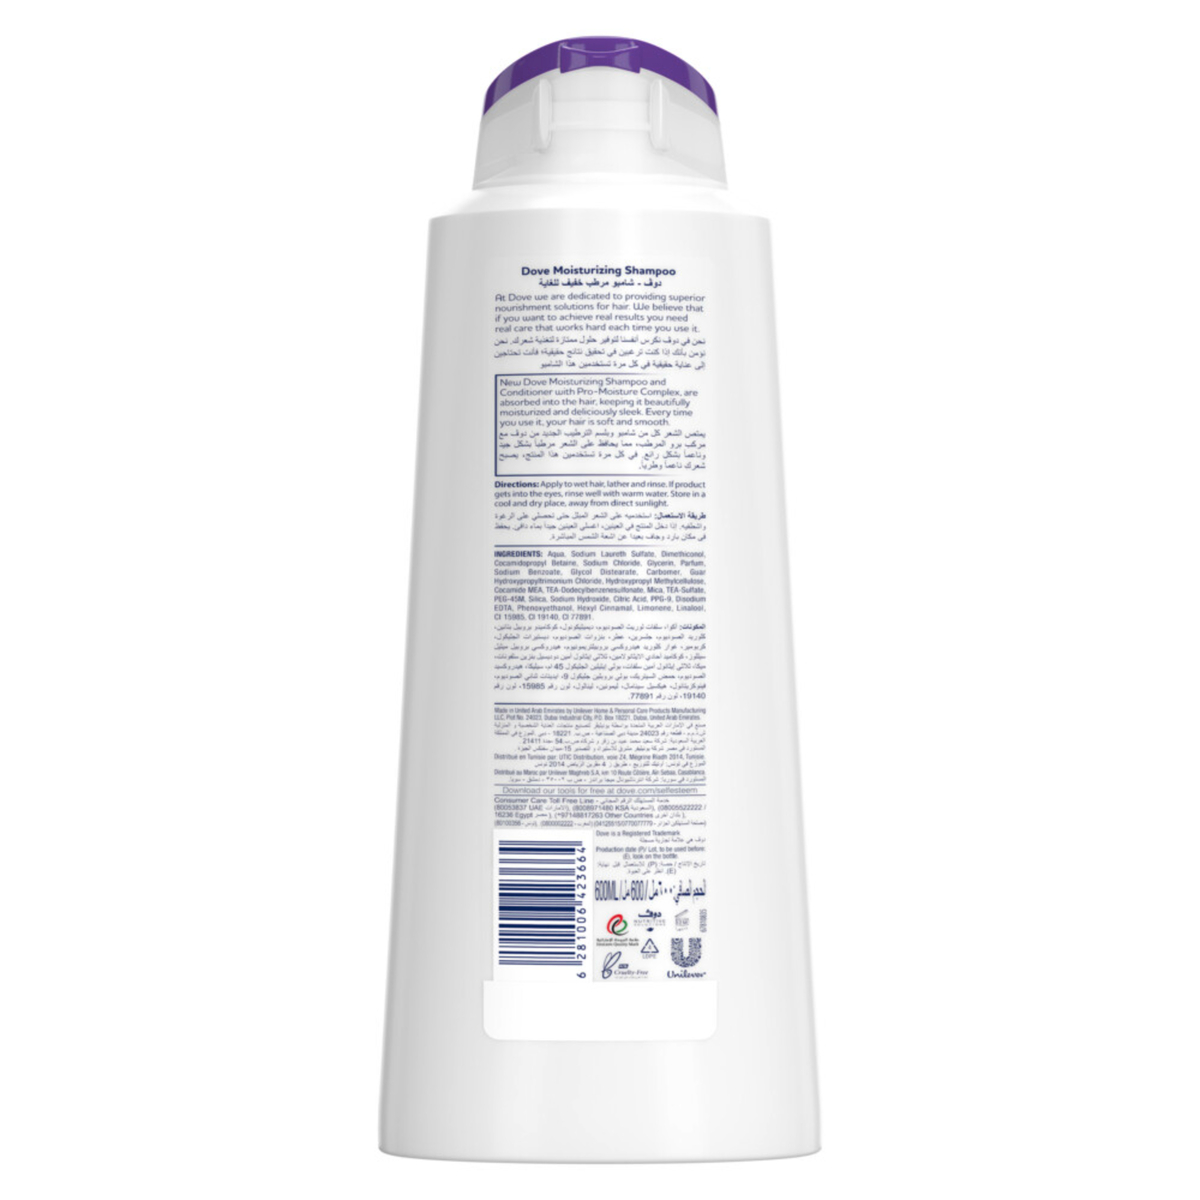 Dove Nutritive Solutions Moisture Shampoo 600 ml